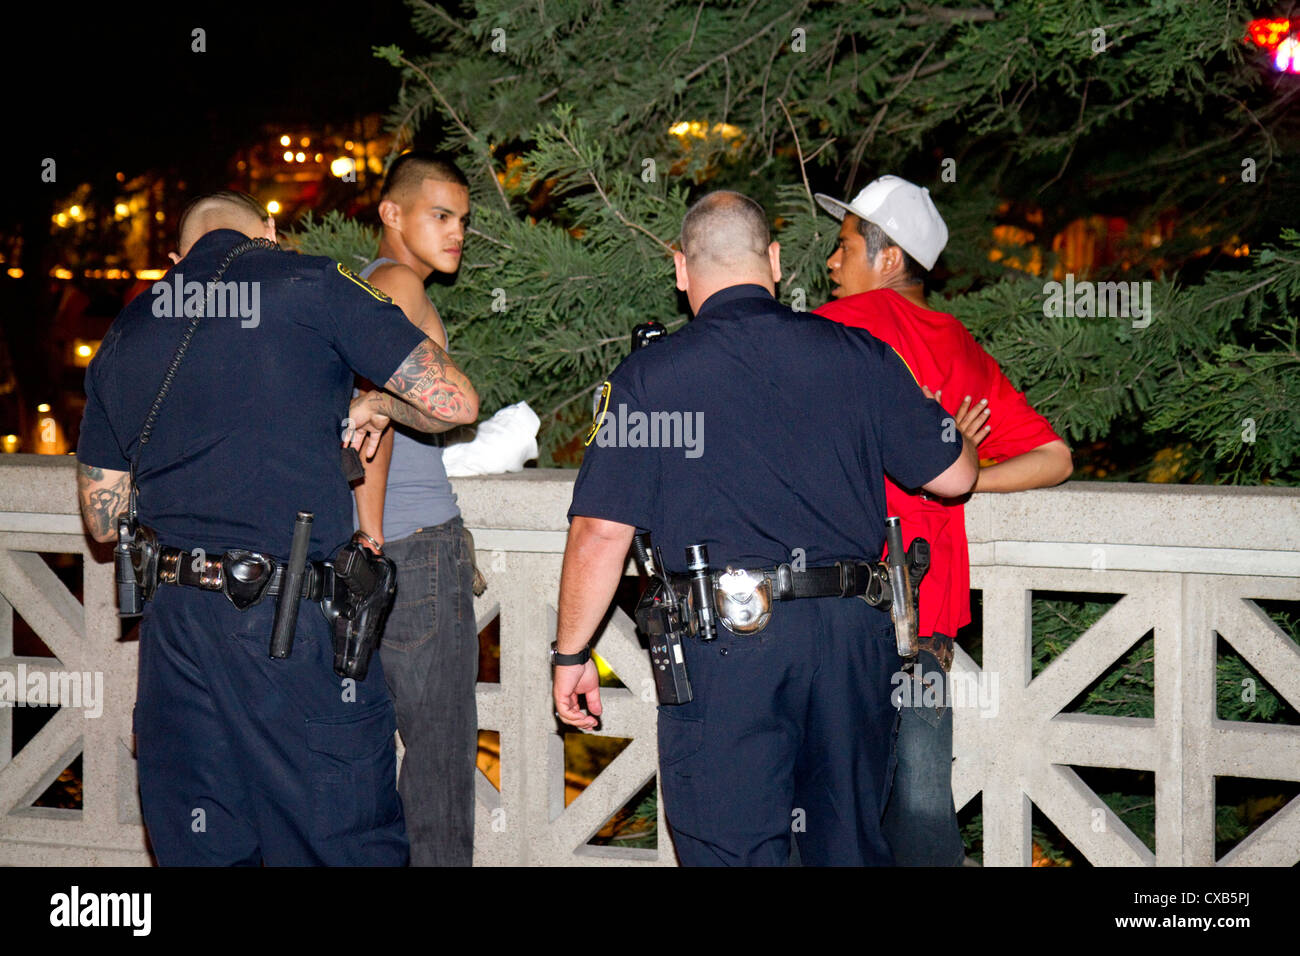 Polizei verhaftet verdächtigen entlang der River Walk in San Antonio, Texas, USA. Stockfoto